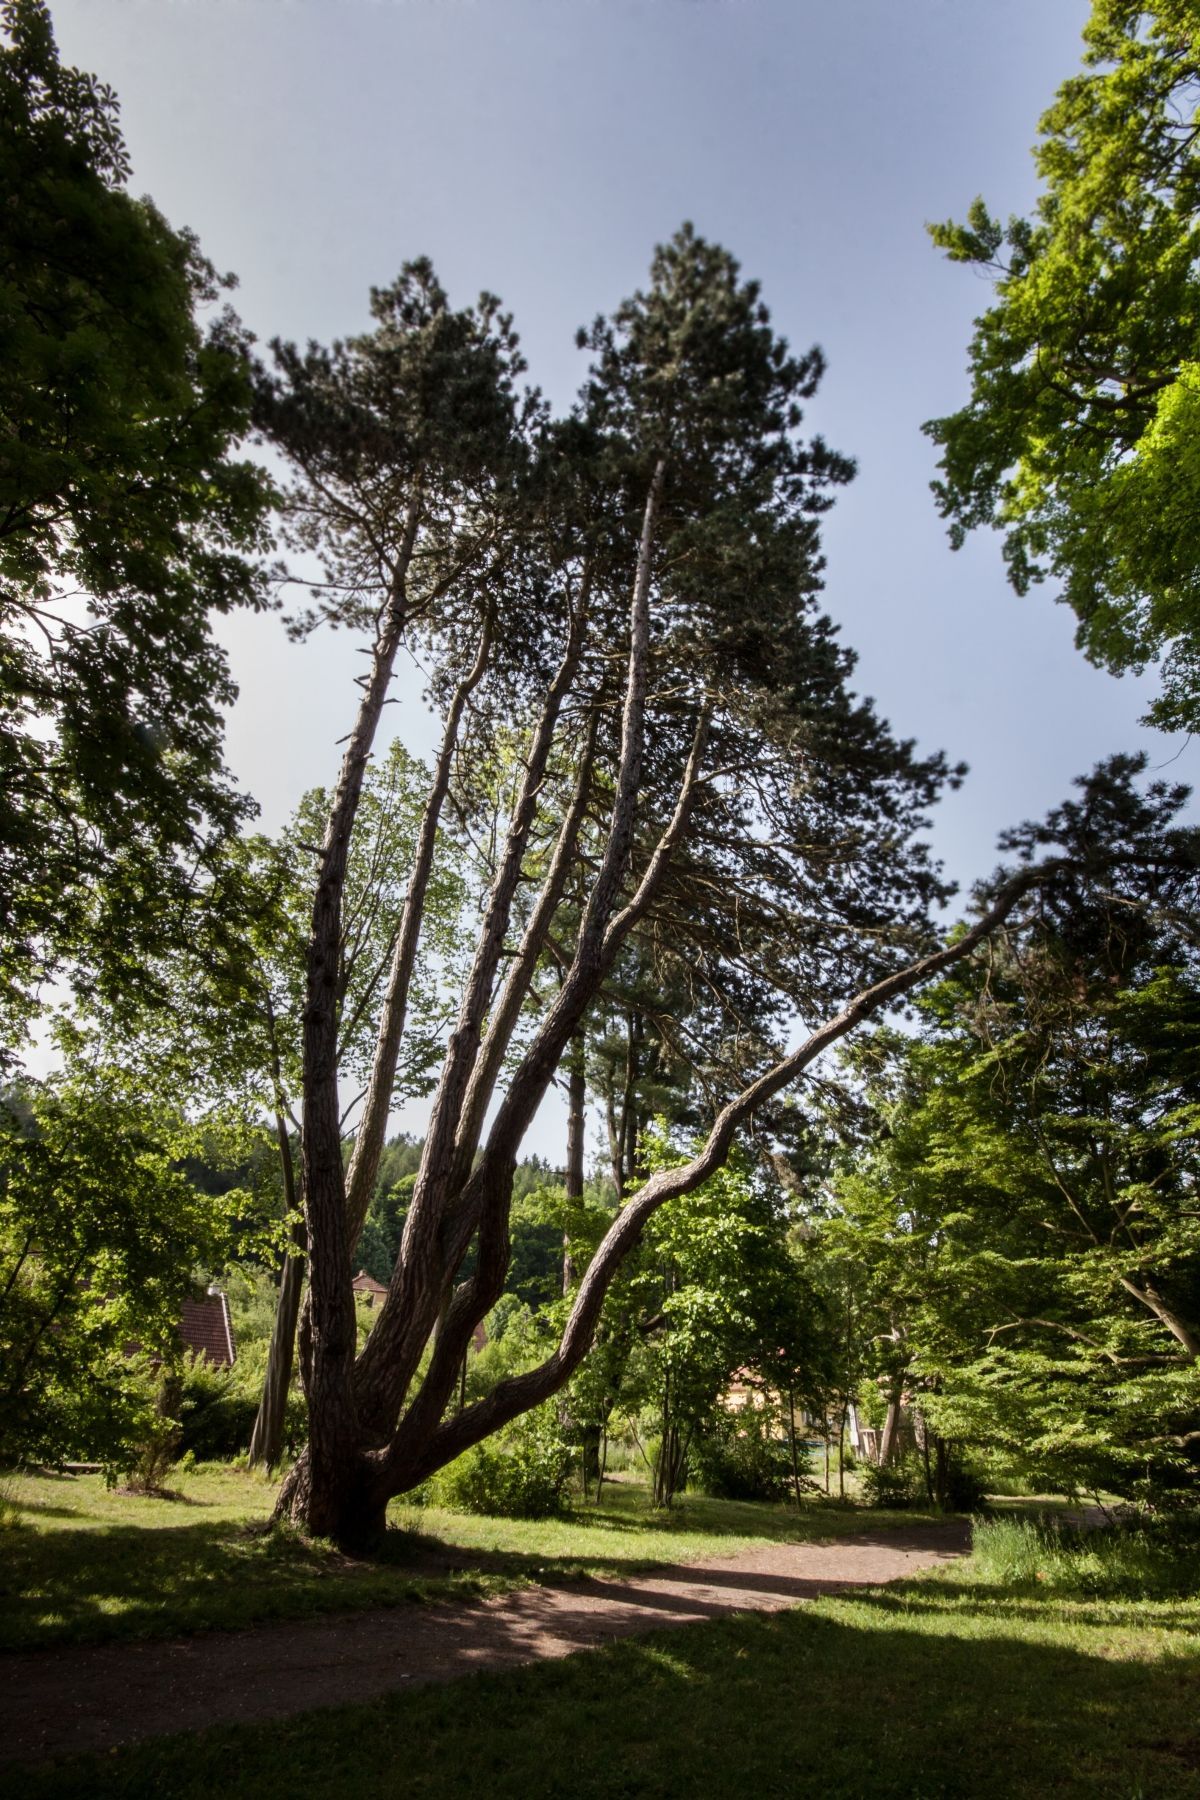 Strom roku 2014 - Opatovická borovice